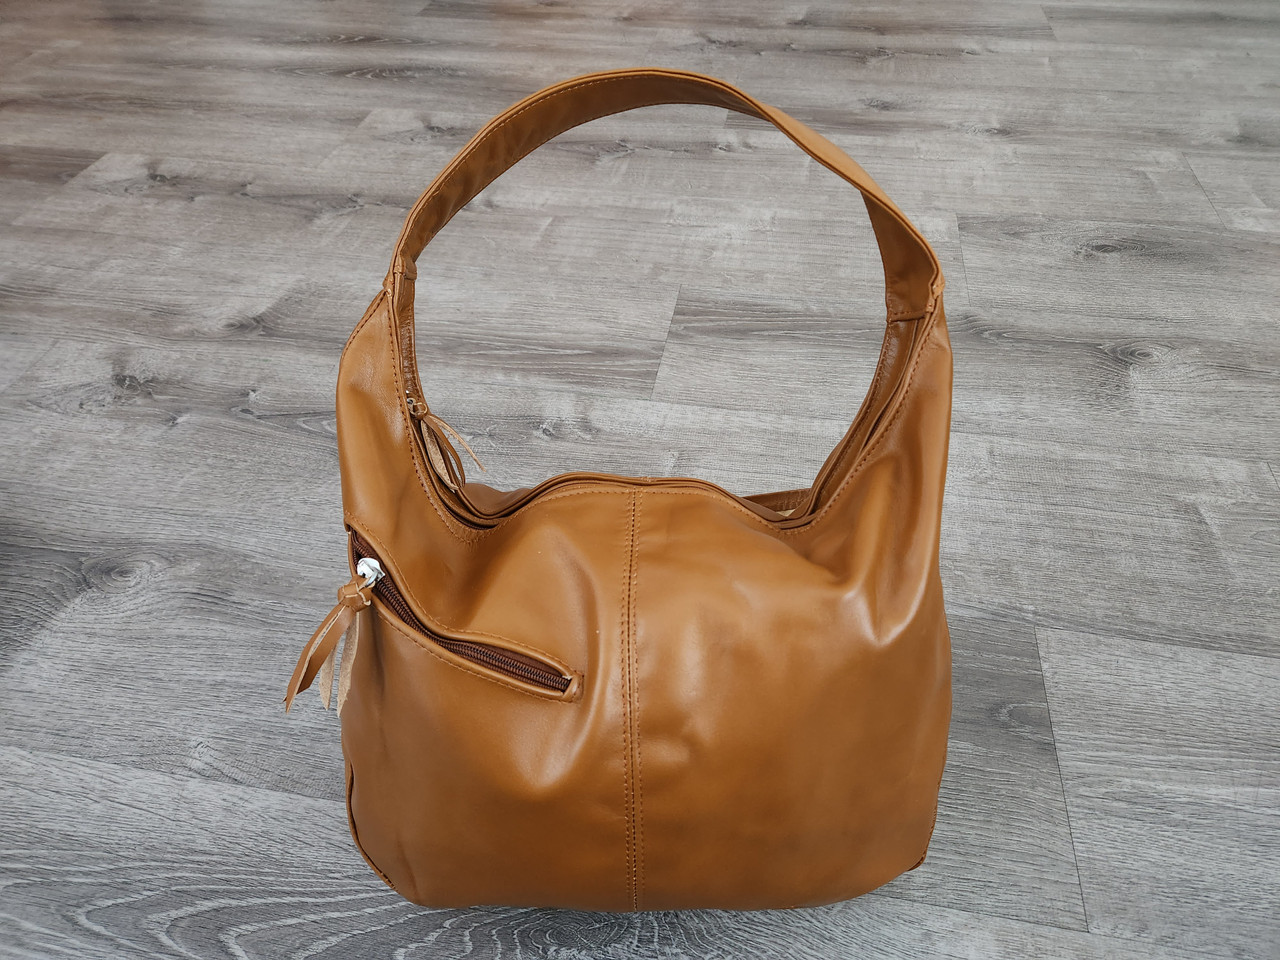 medium size handbags